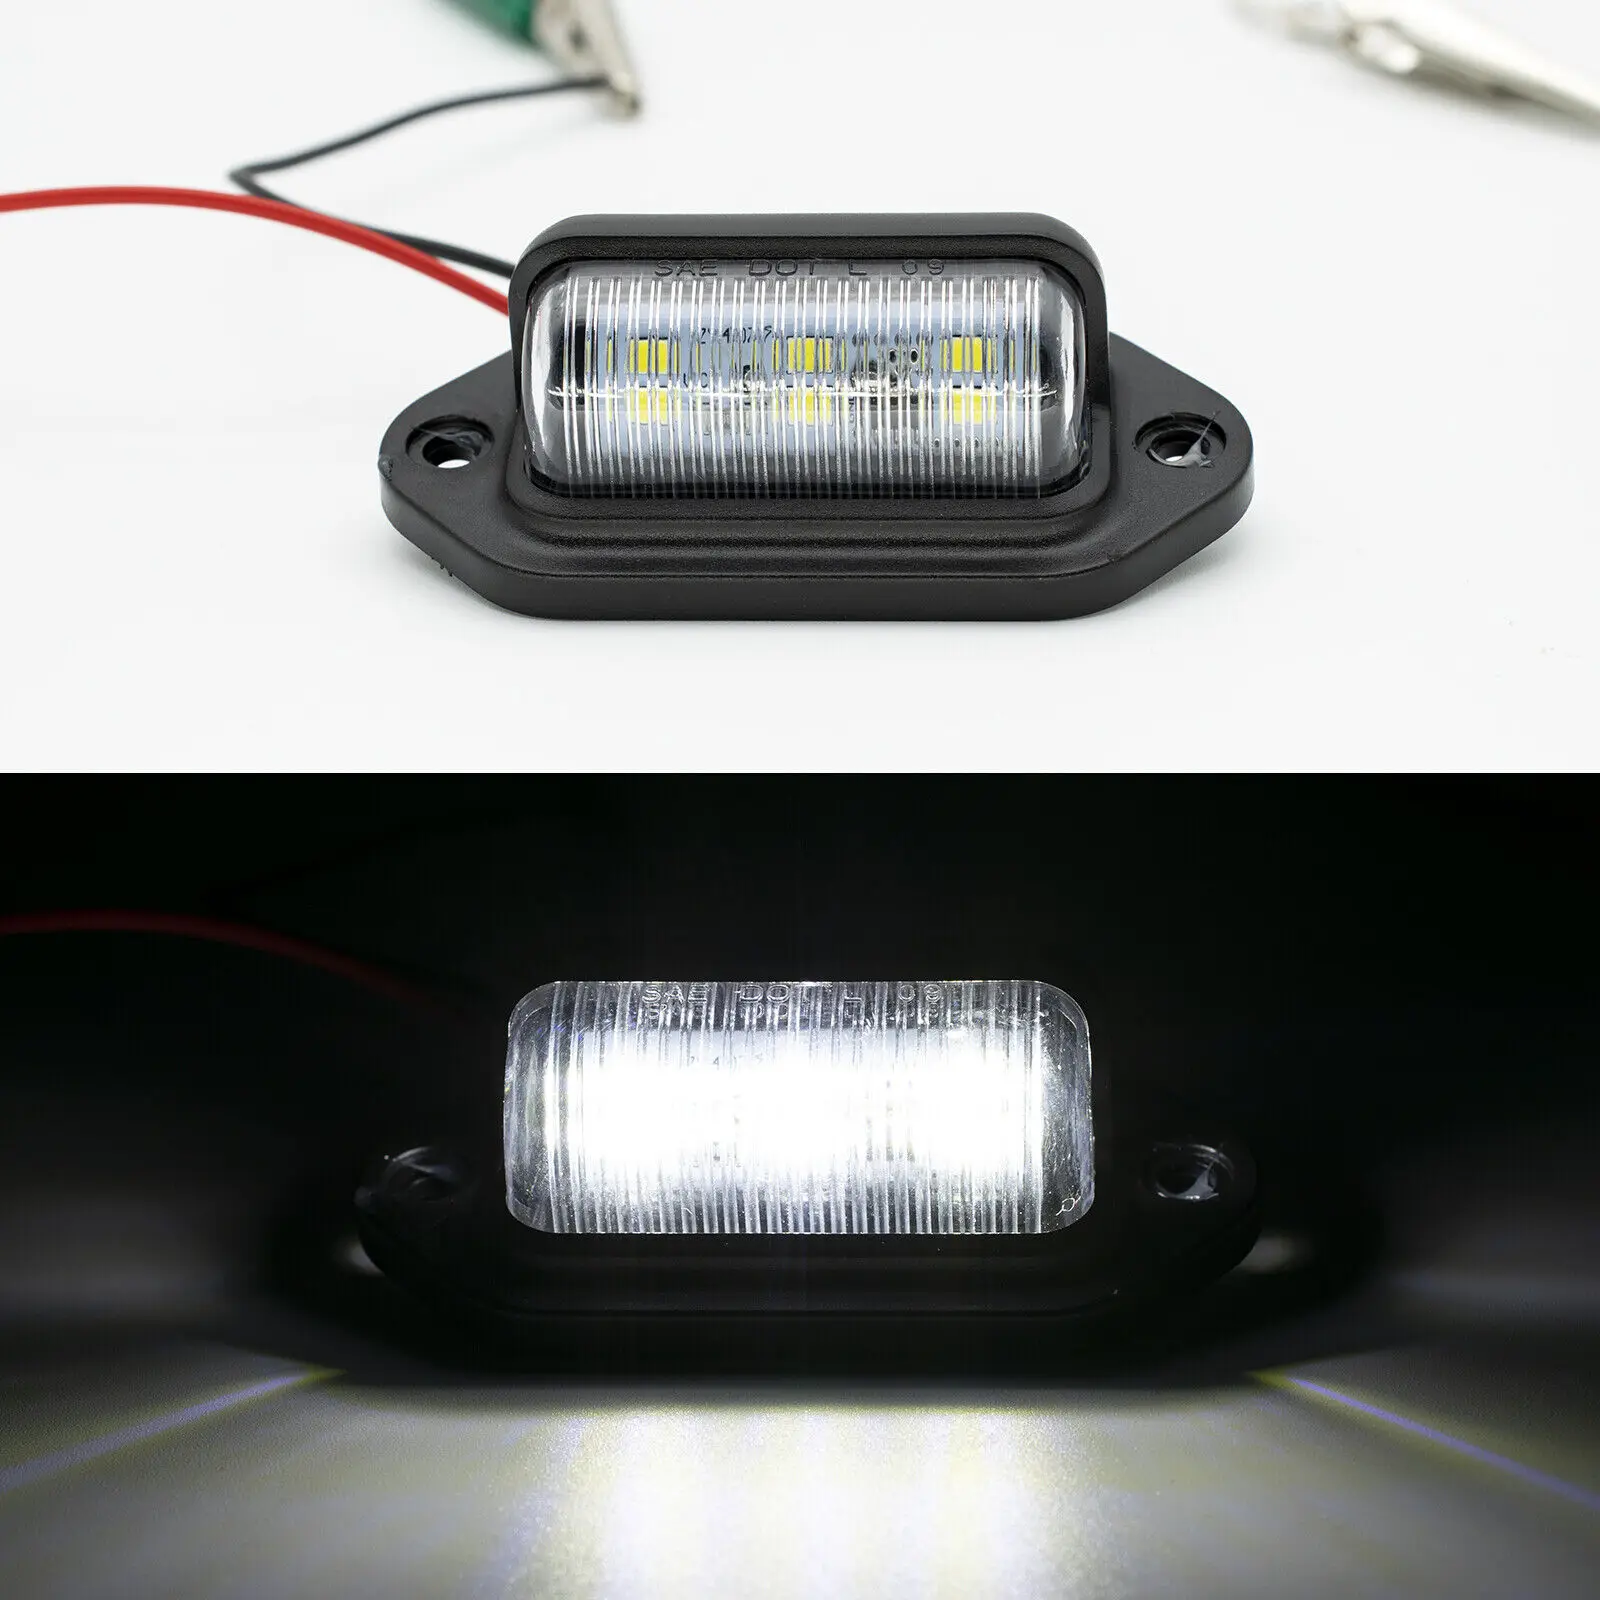 

4PCS 12V 6 LED License Plate Lights For Car Truck RV Trailer Van Universal License Taillight Waterproof Rear Lamp